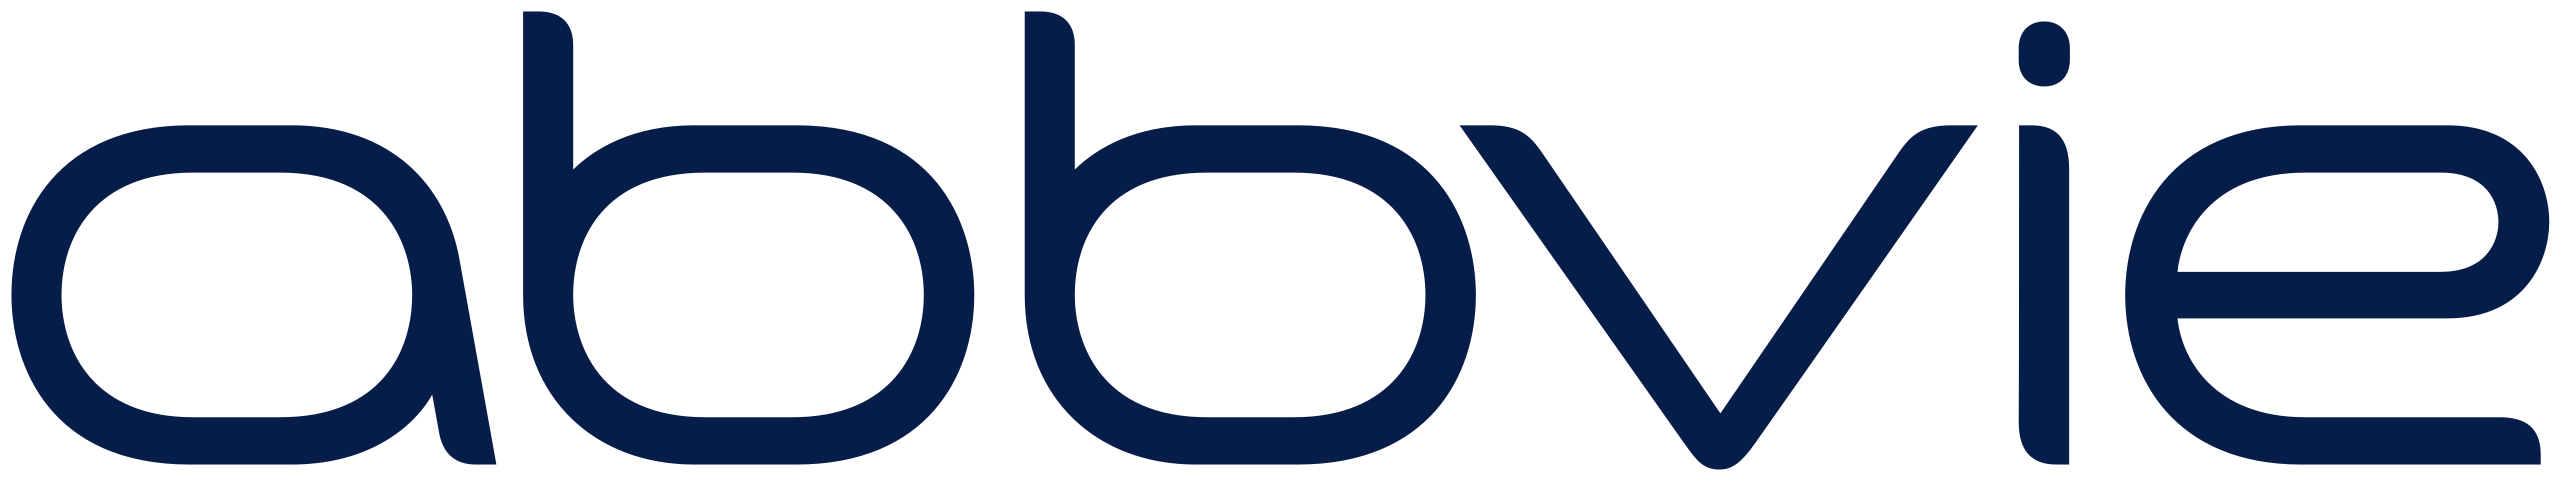 AbbVie_logo